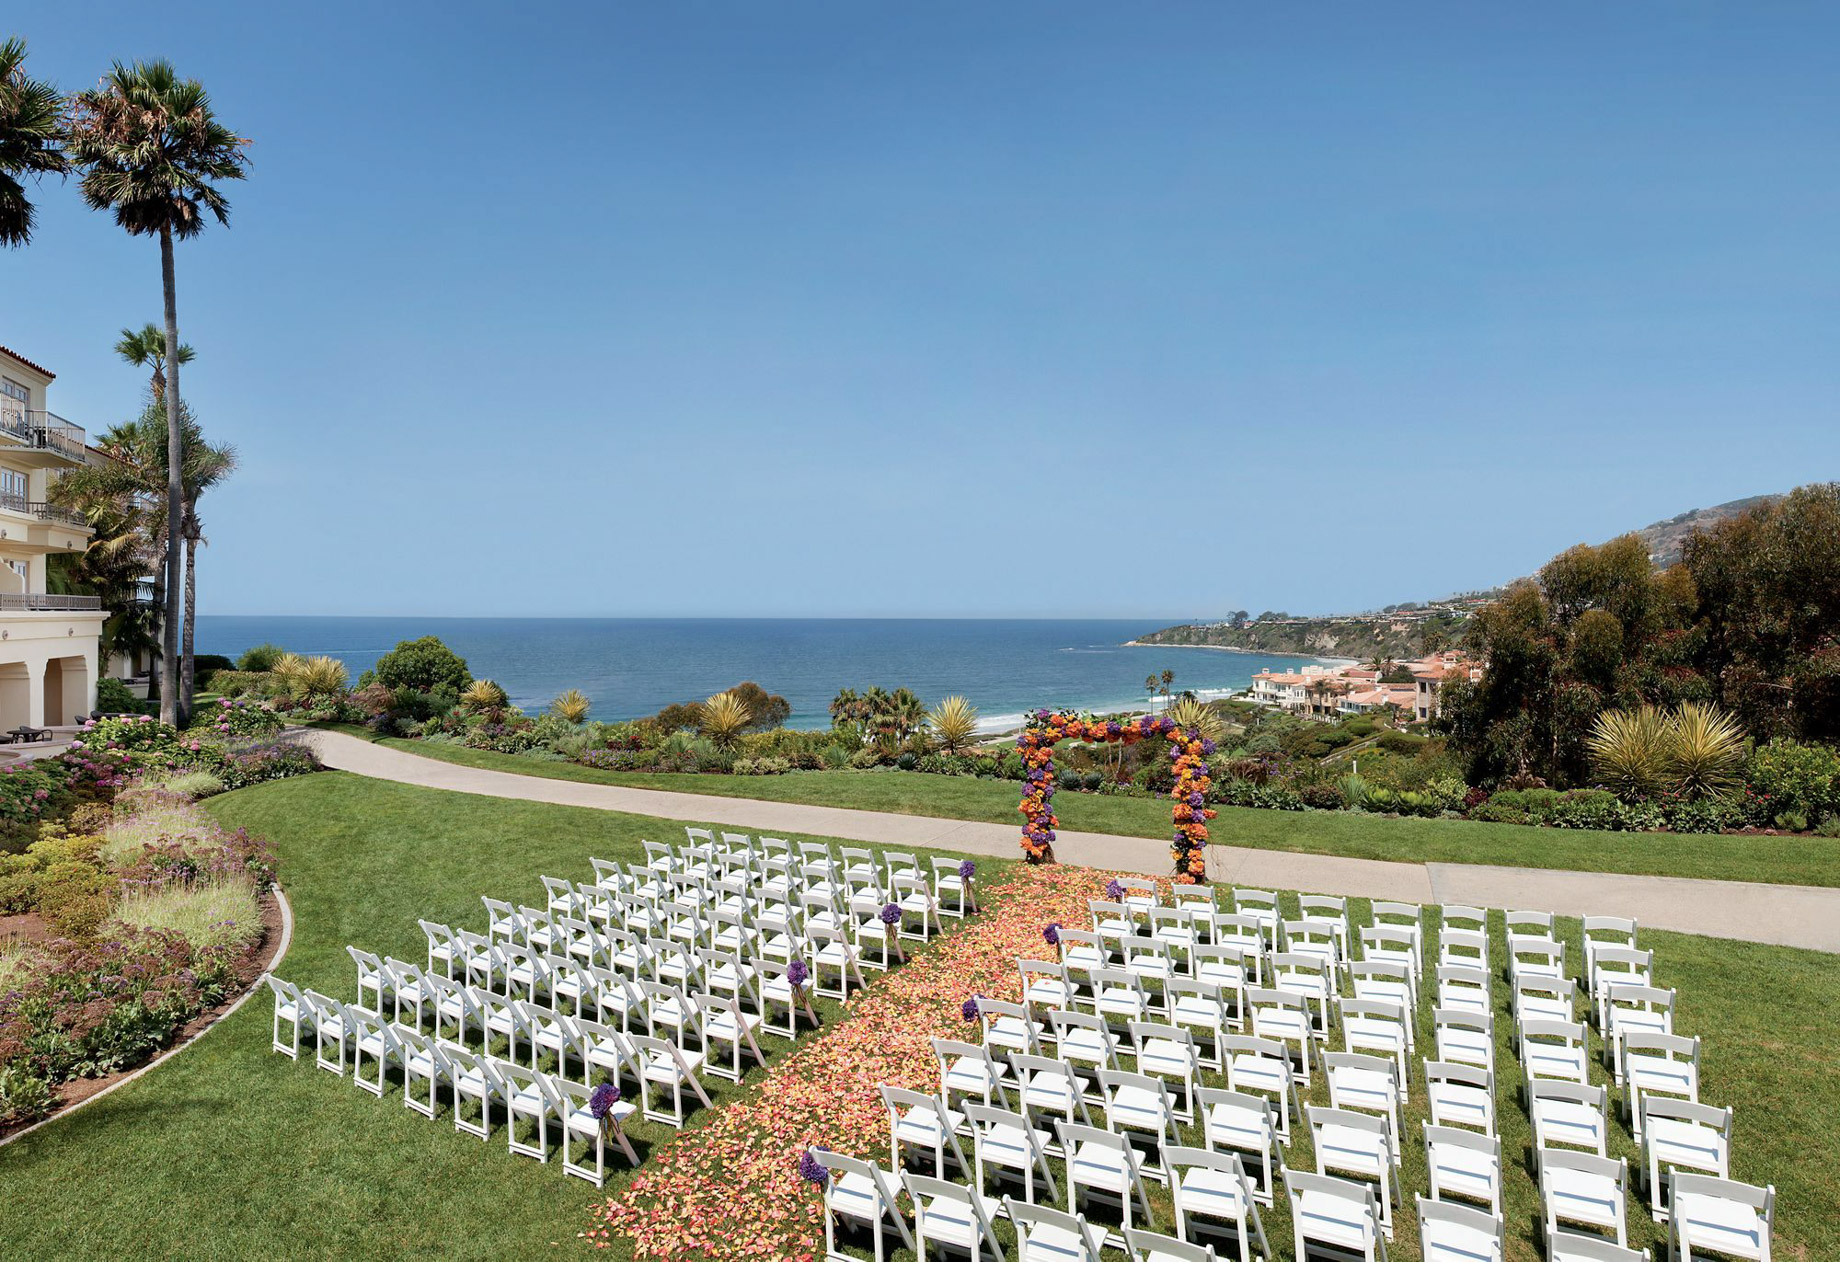 The Ritz-Carlton, Laguna Niguel Resort – Dana Point, CA, USA – Outdoor Wedding Venue